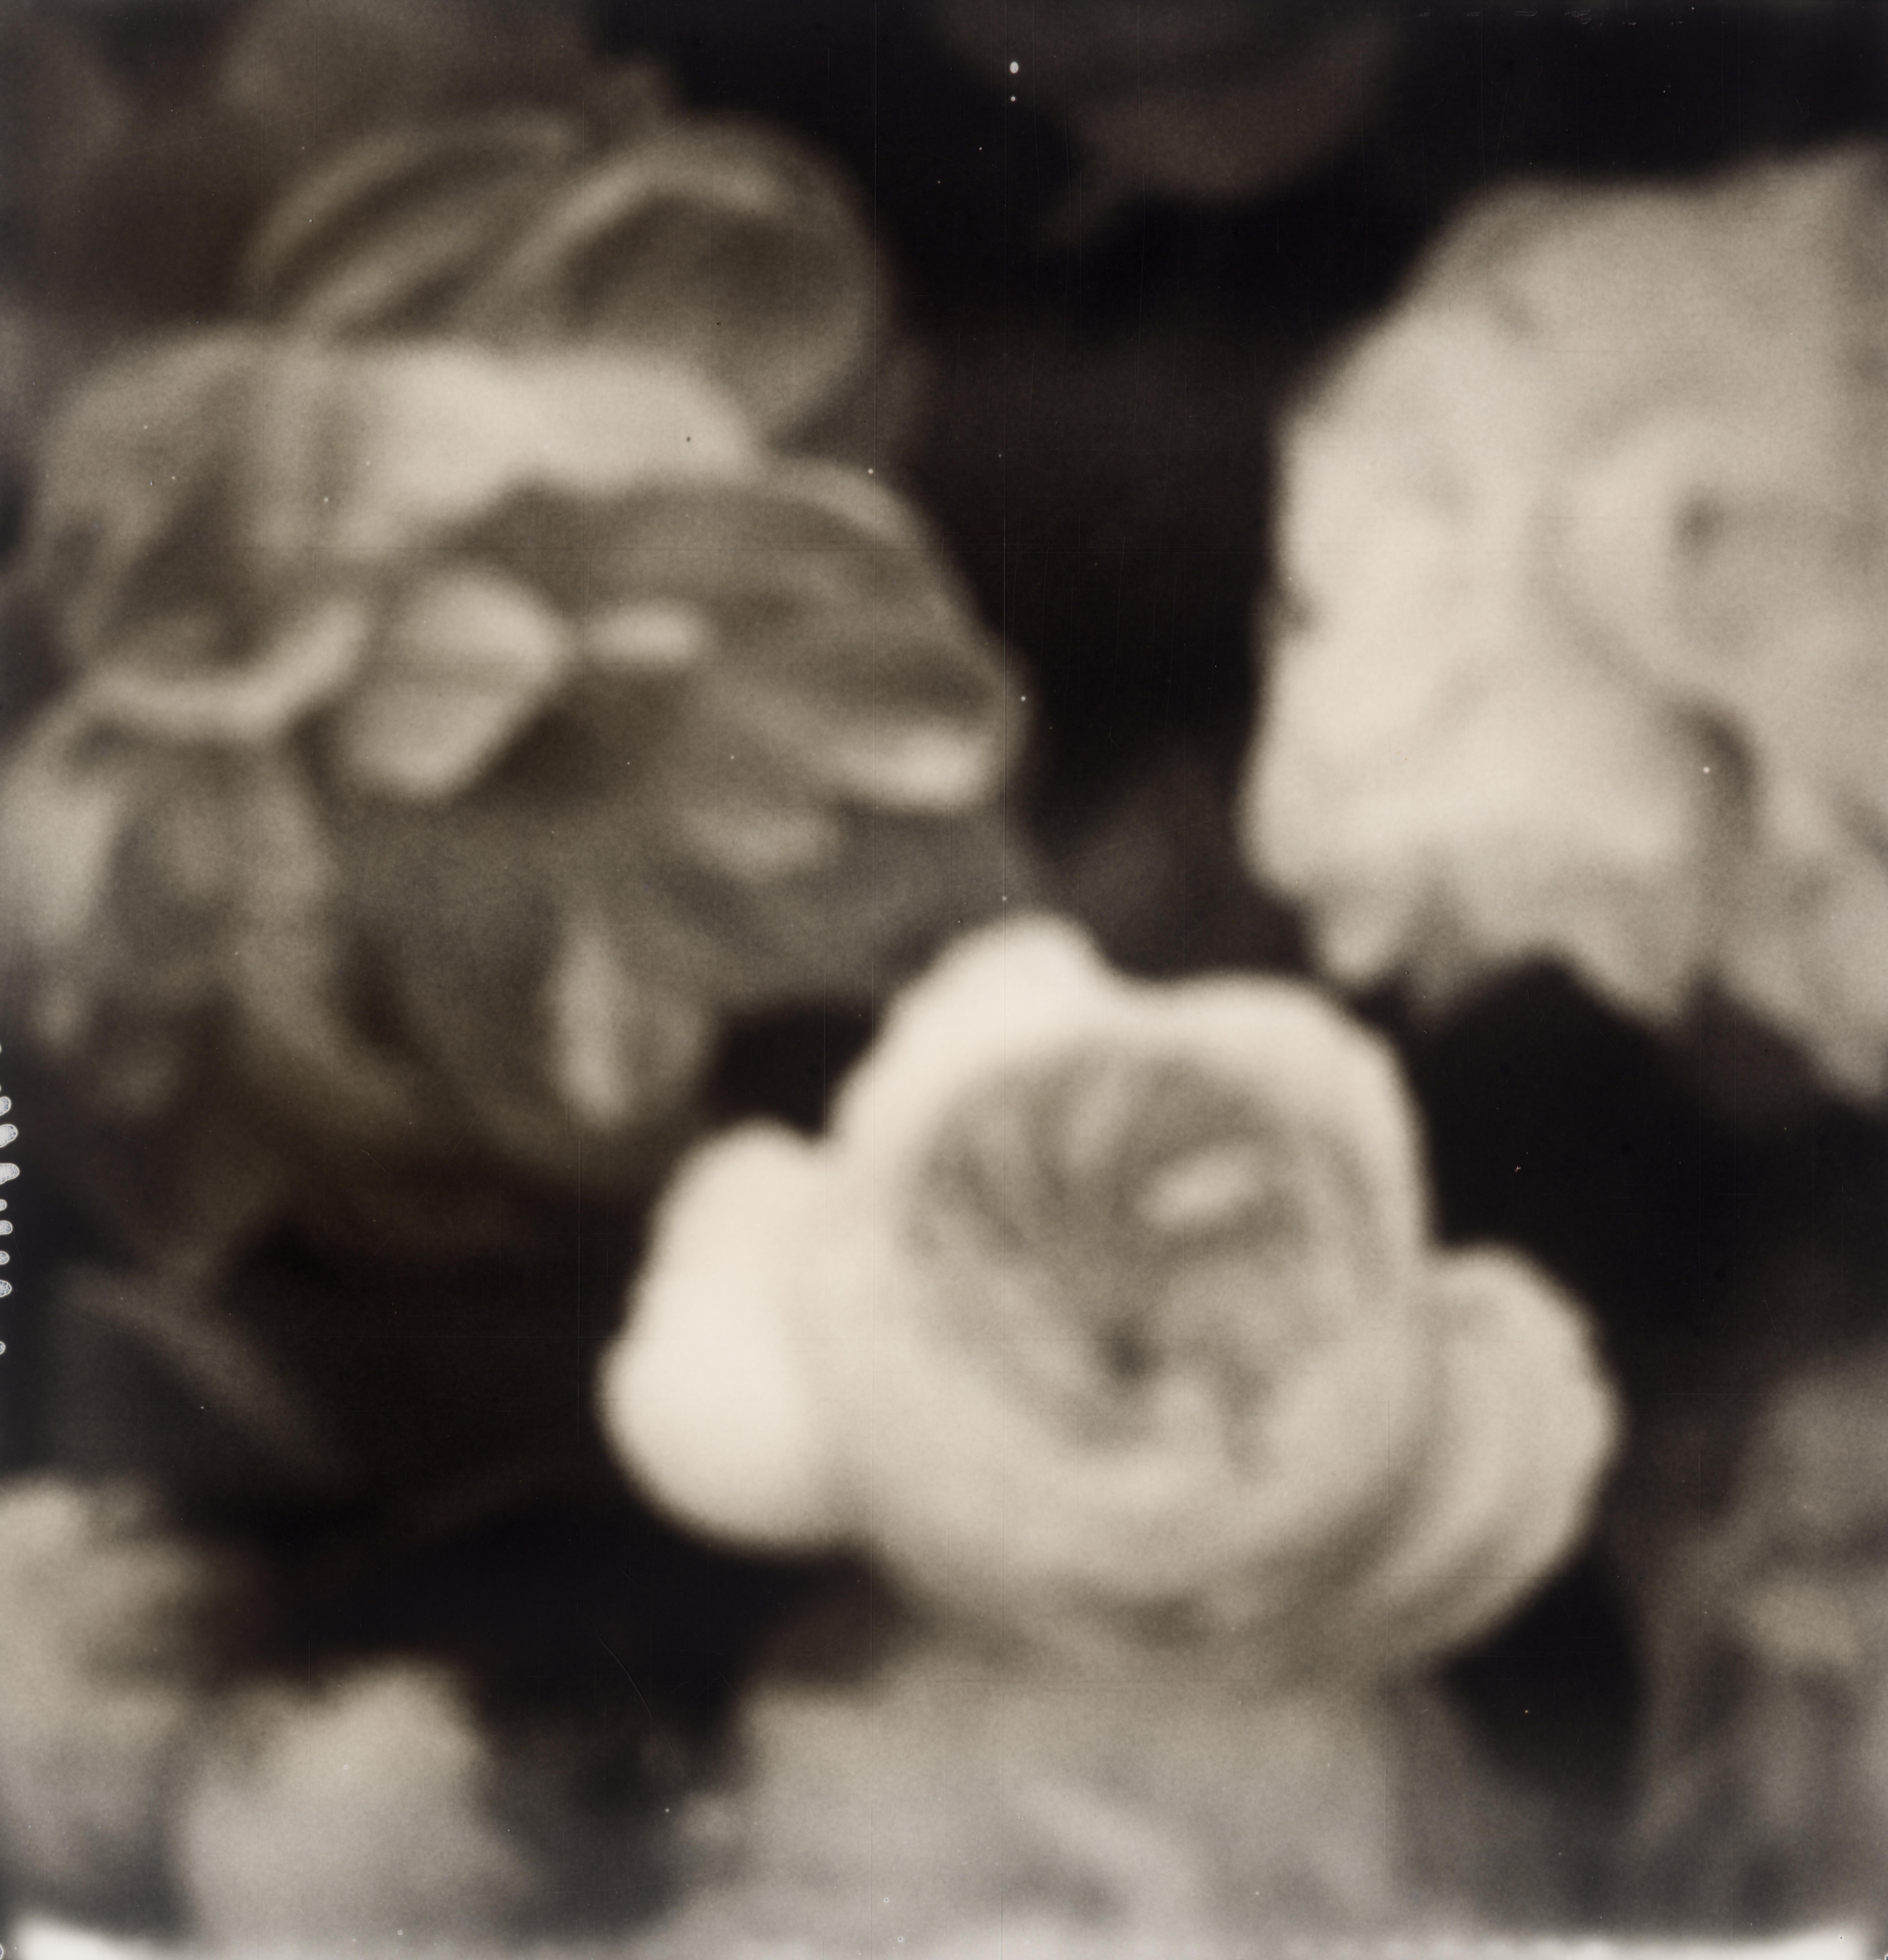 Figurative Print Pia Clodi - Starlet Rose - Impression photographique contemporaine du 21e siècle - Polaroid B/W